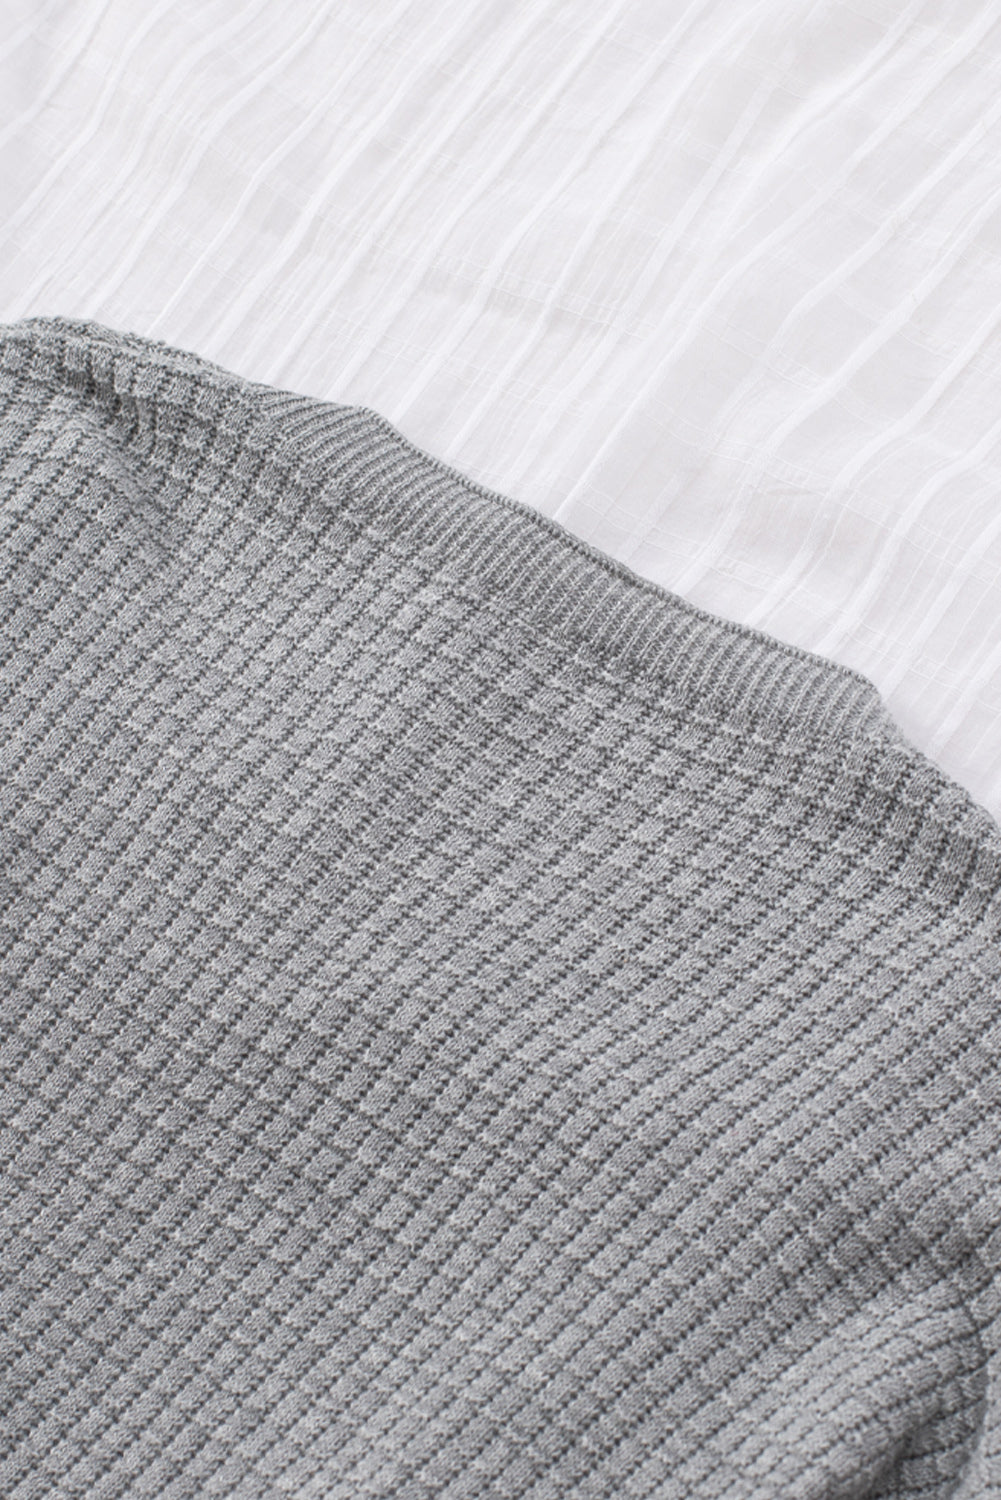 Sivo crni/ružičasti/sivi/kaki/boja marelice pulover s vaflastim izrezom s omotom